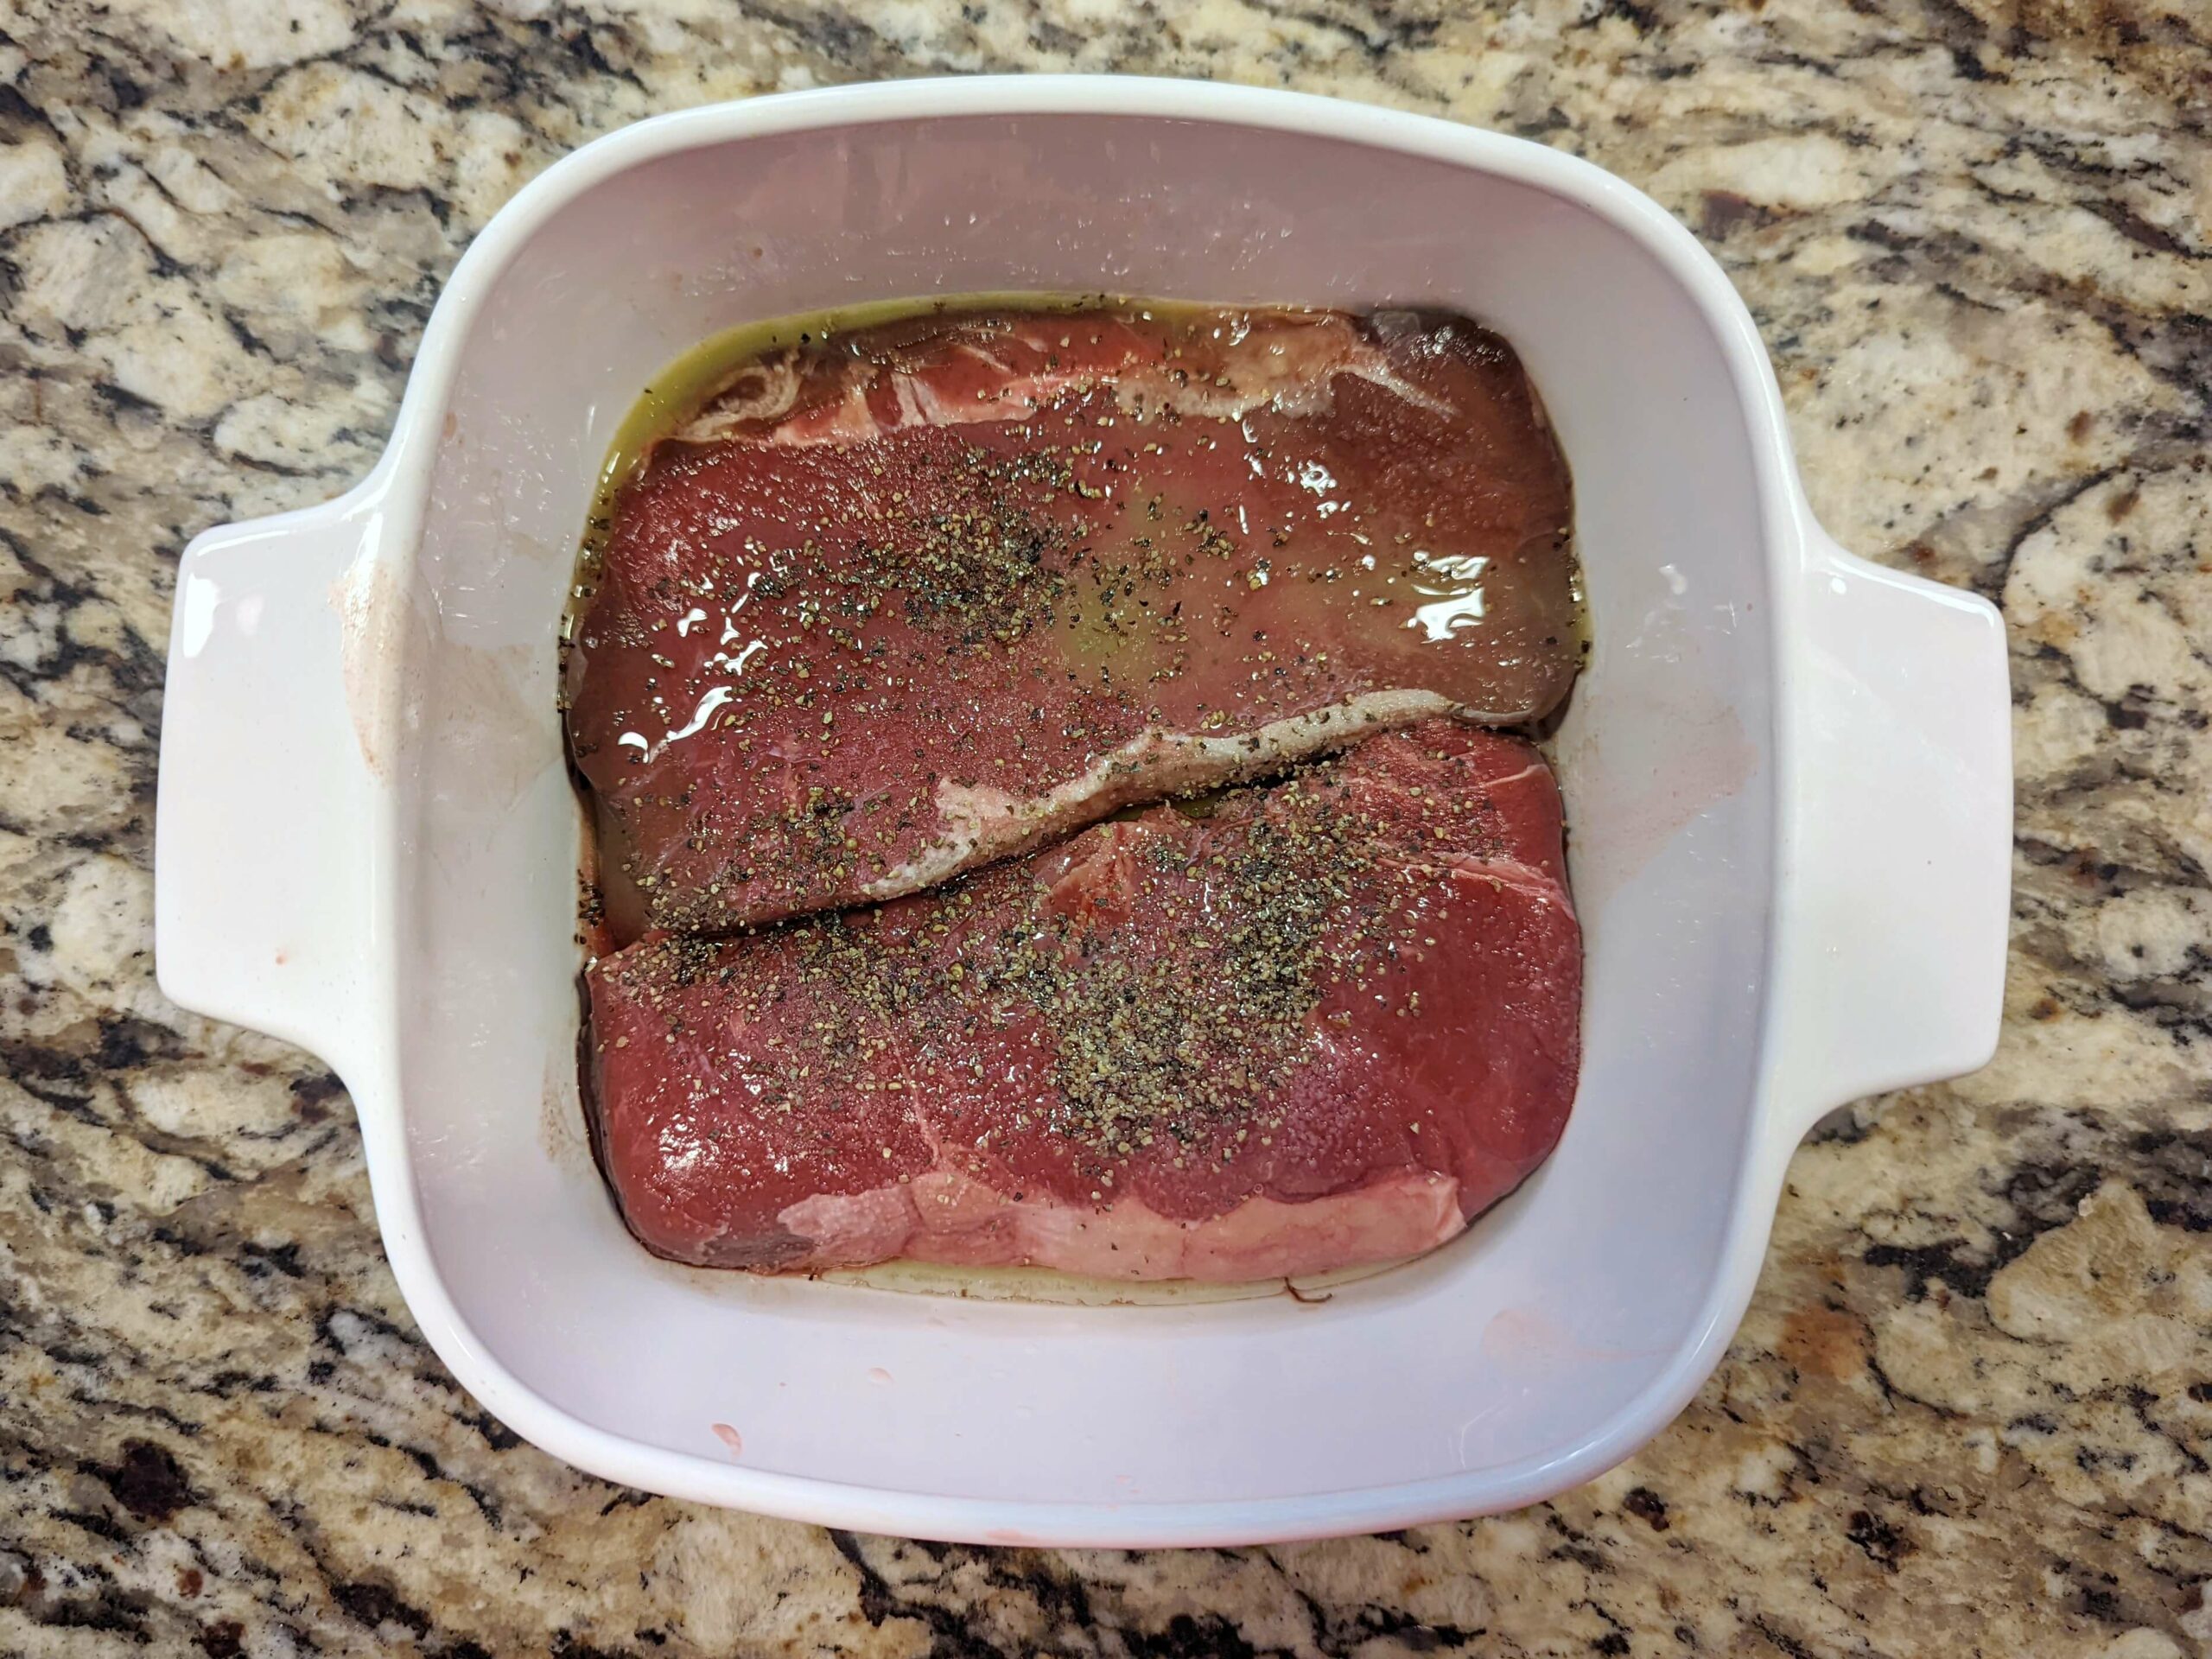 Bison steak in a dish with orange juice, salt, and pepper.